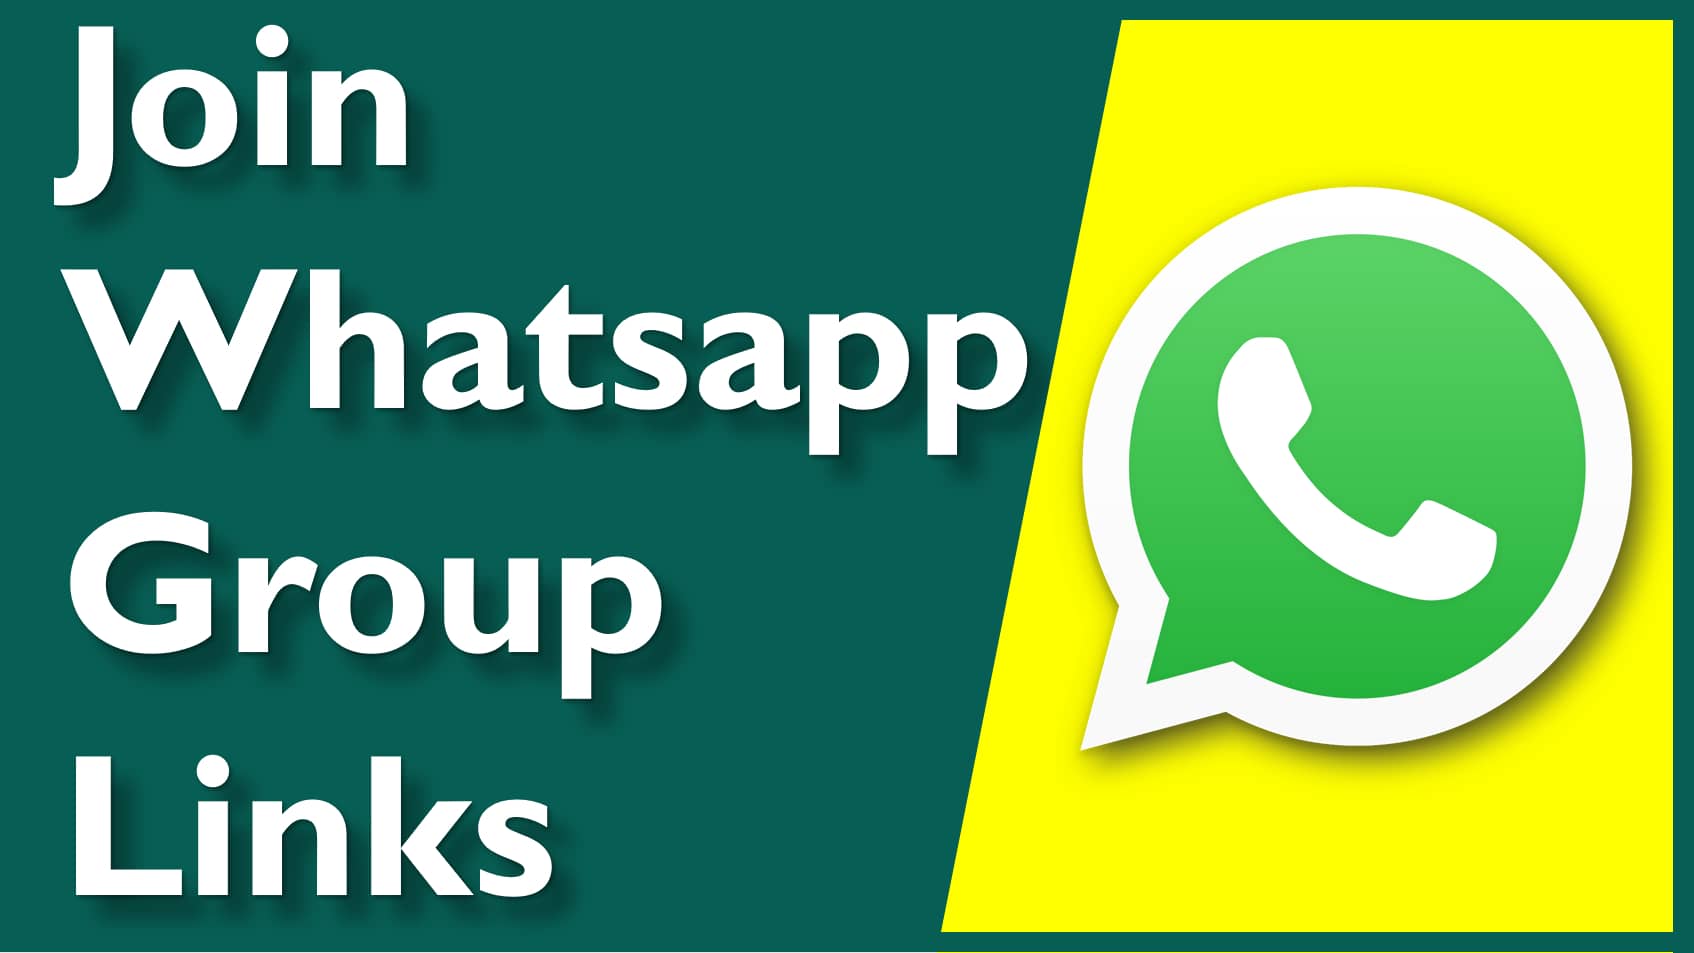 Up dating best 2021 ☝️ whatsapp groups 119 BEST